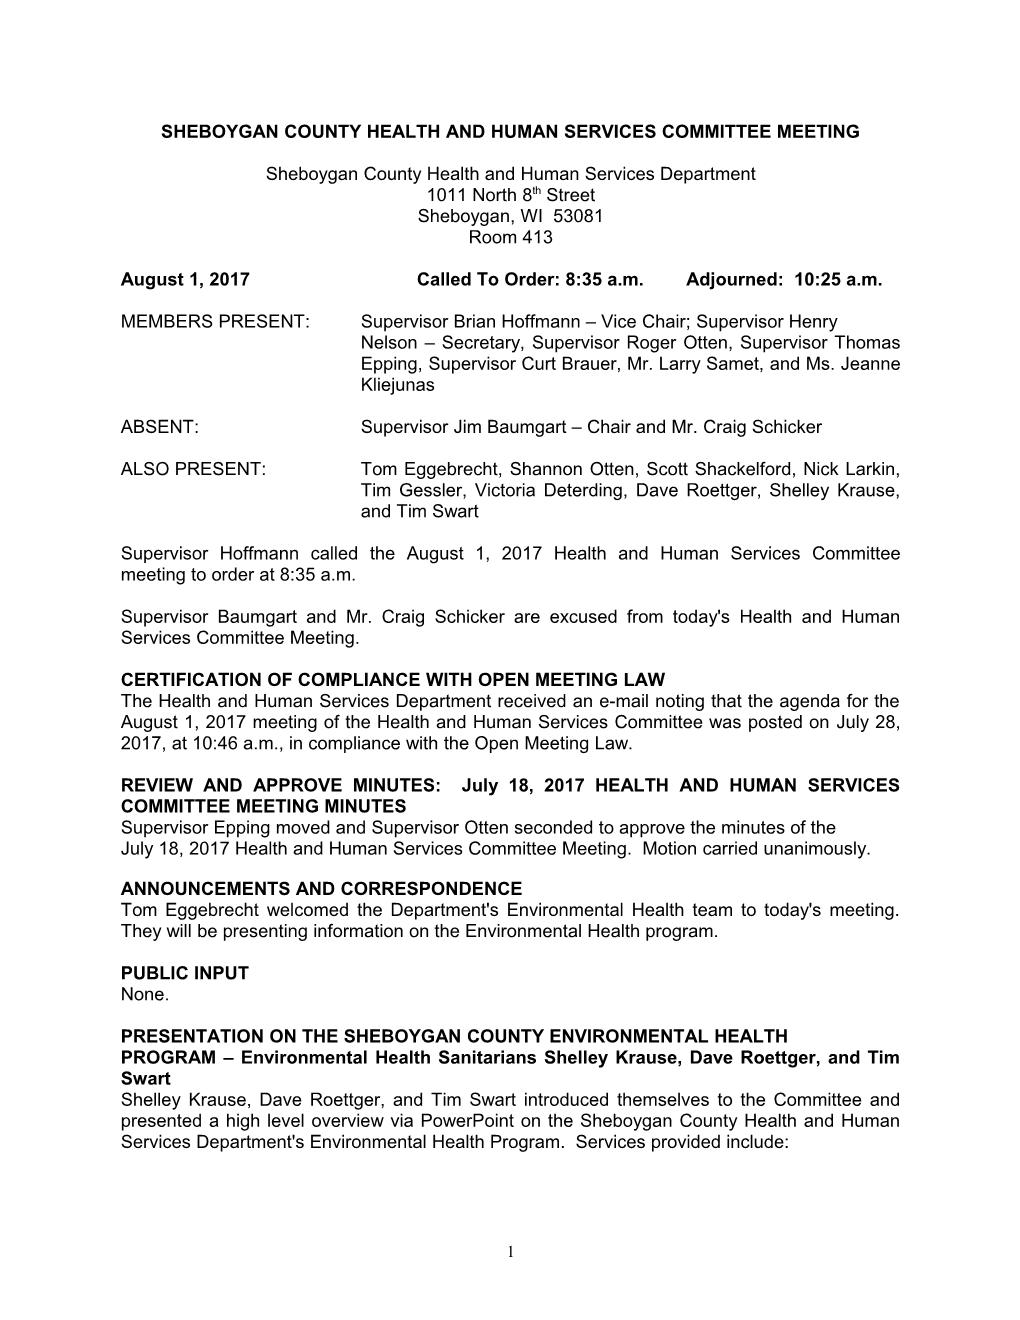 Sheboygan County Health and Human Services Board Minutes